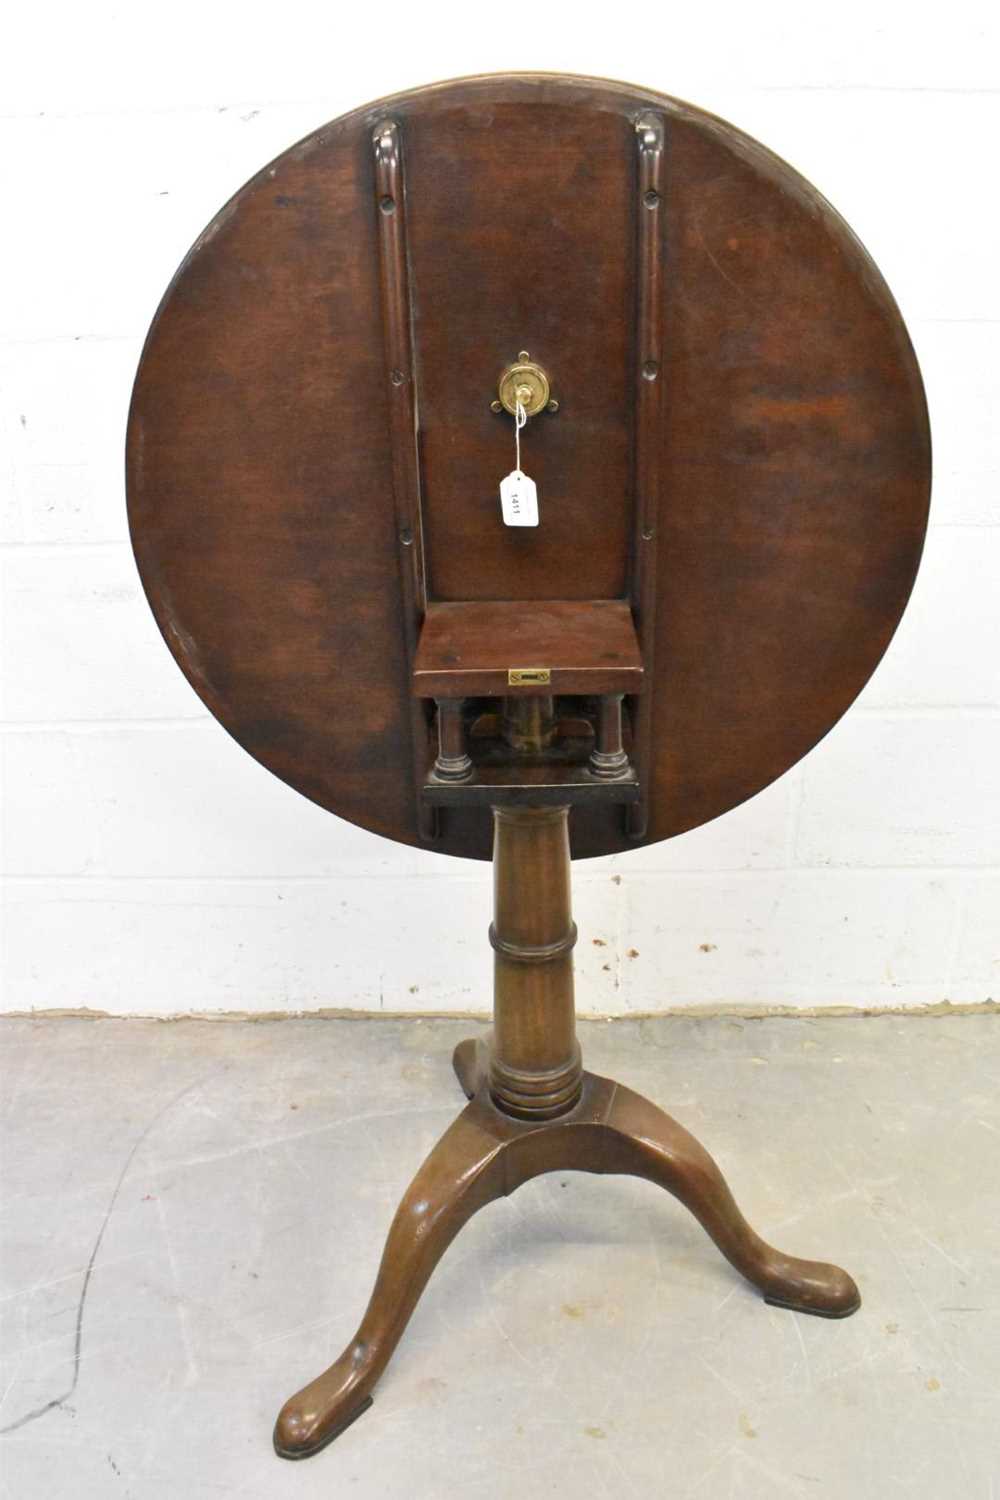 Unusual Georgian tilt top wine table with revolving bird cage mechanism - Image 2 of 5